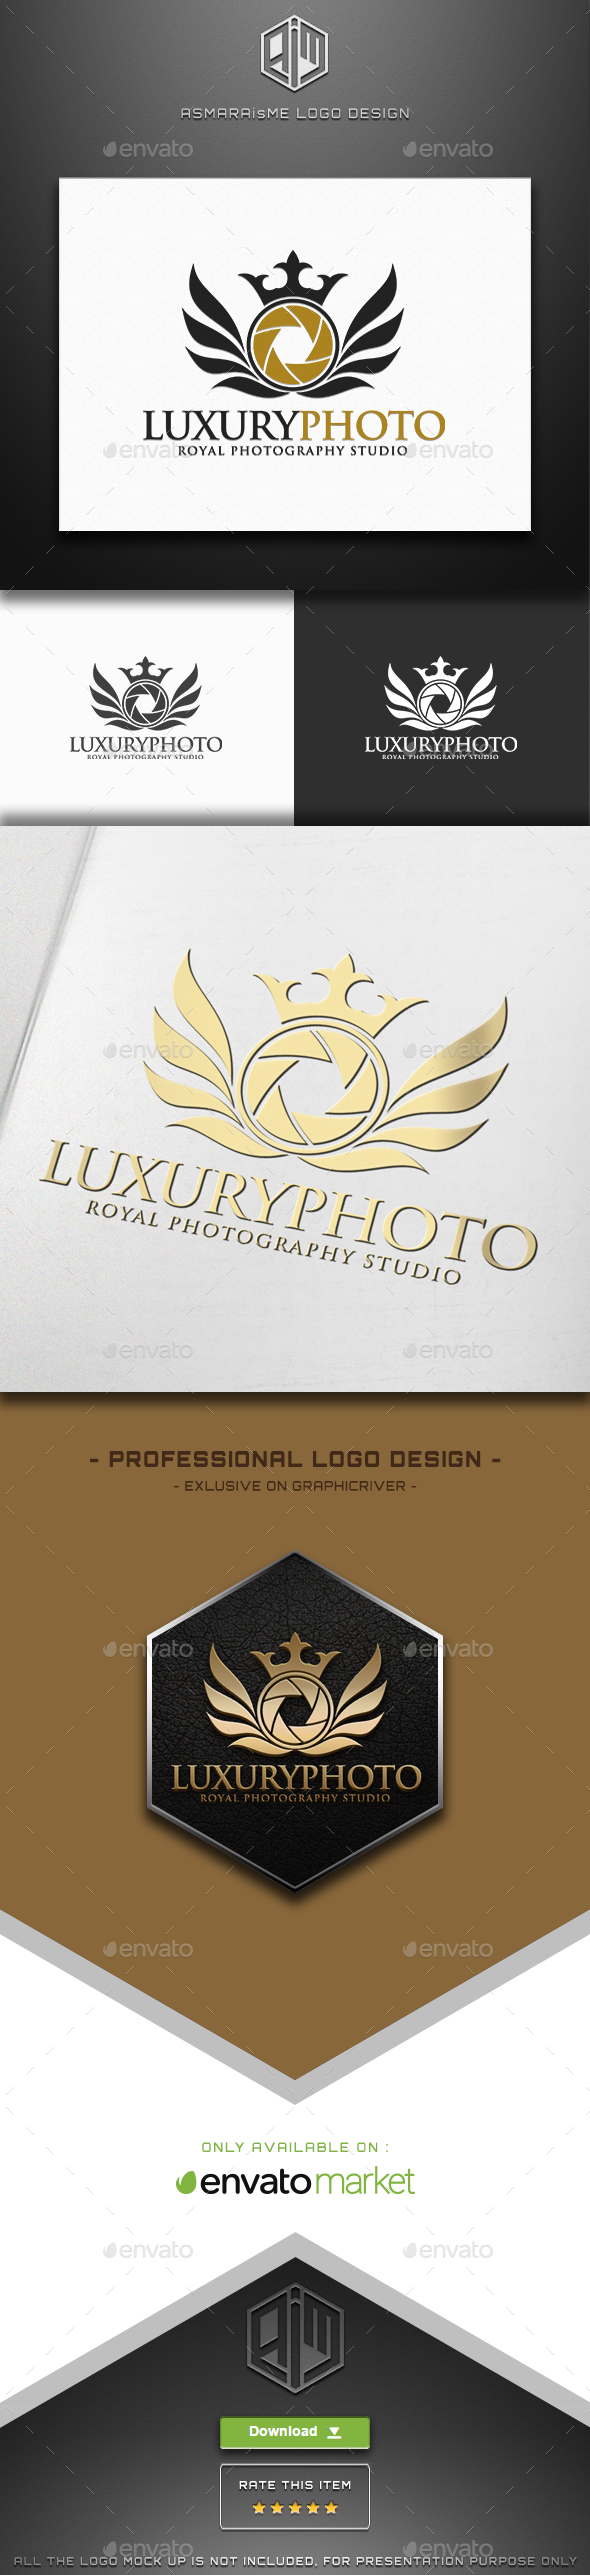 Camera Logo - Luxury Photo - Royal Photography Studio